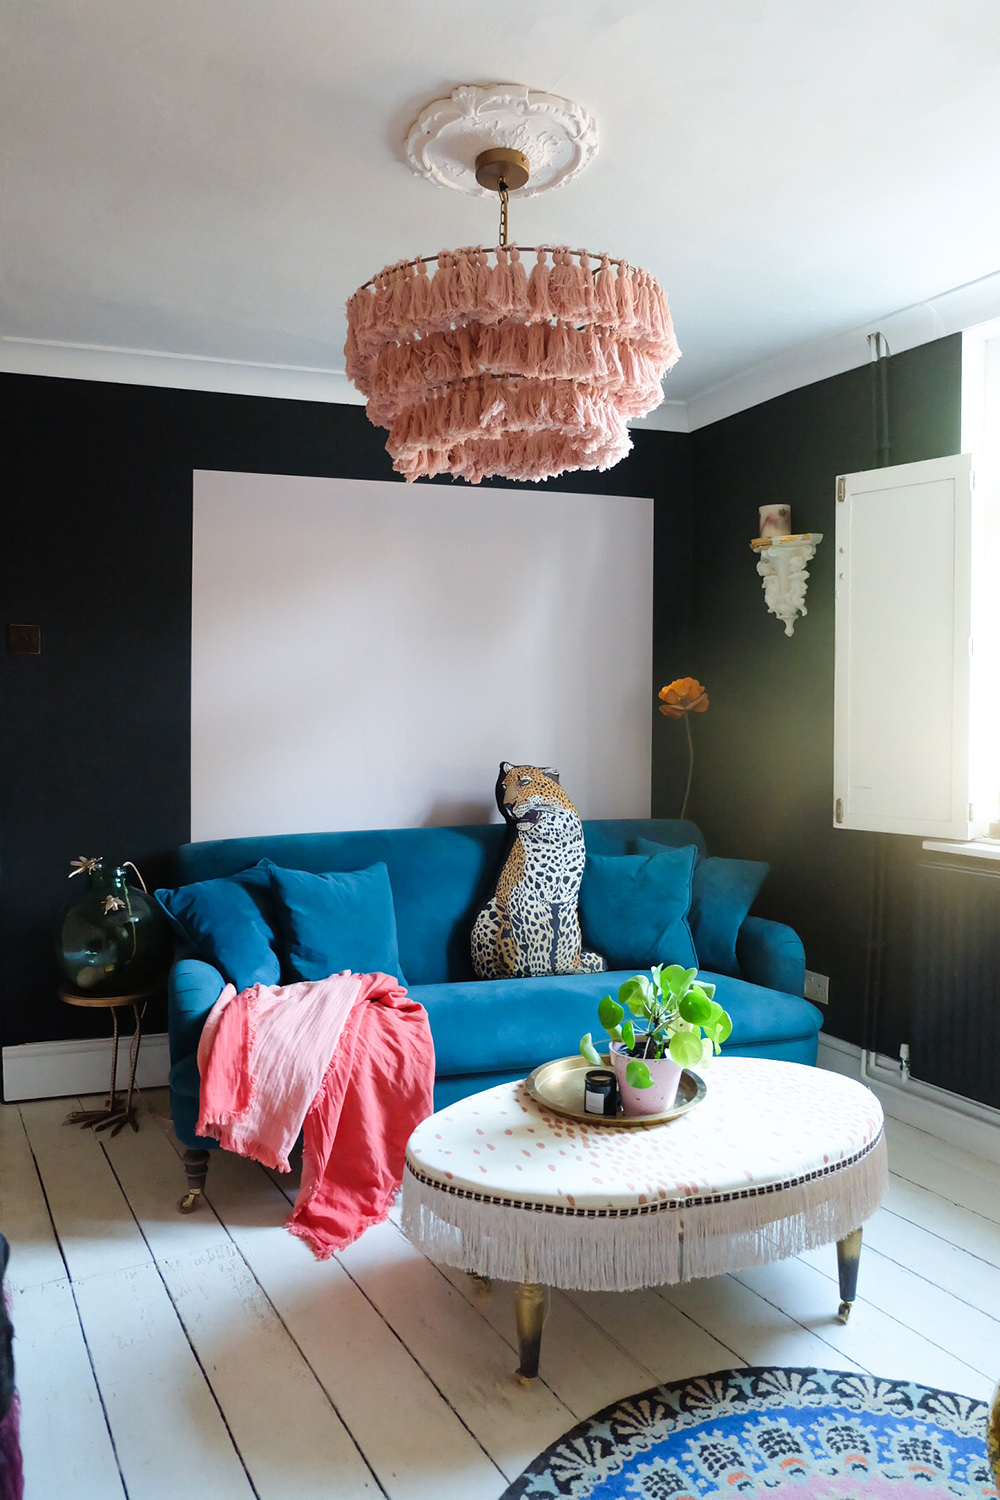 Victorian living room transformation - dark and moody decor